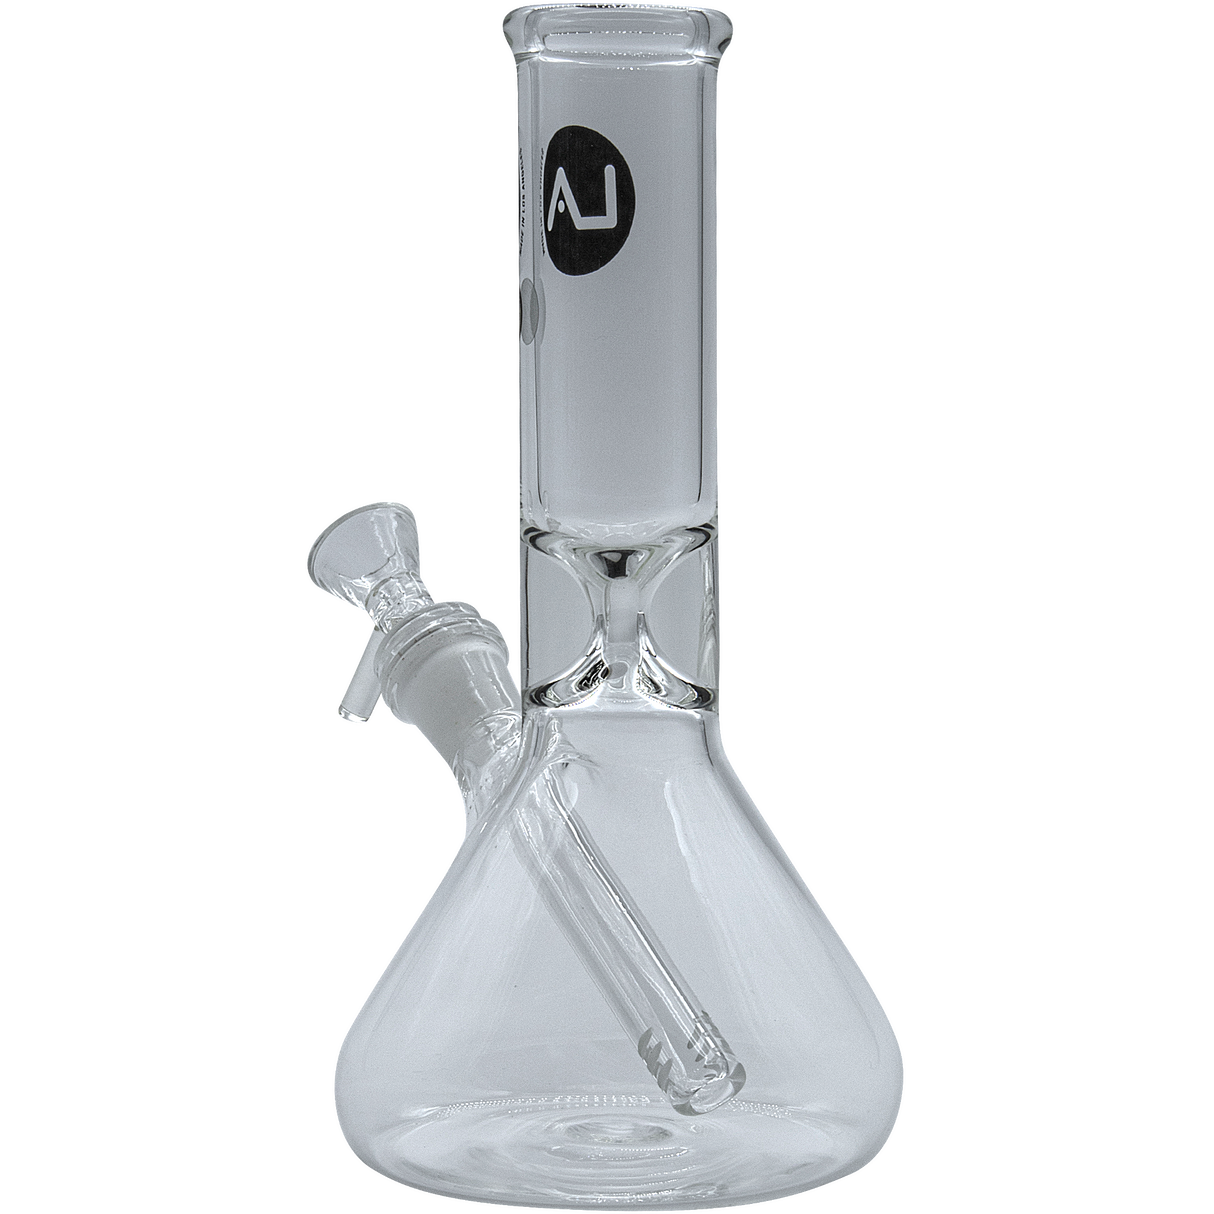 LA Pipes "Shortstop" Beaker Bong, 10" Borosilicate Glass, Clear, Front View